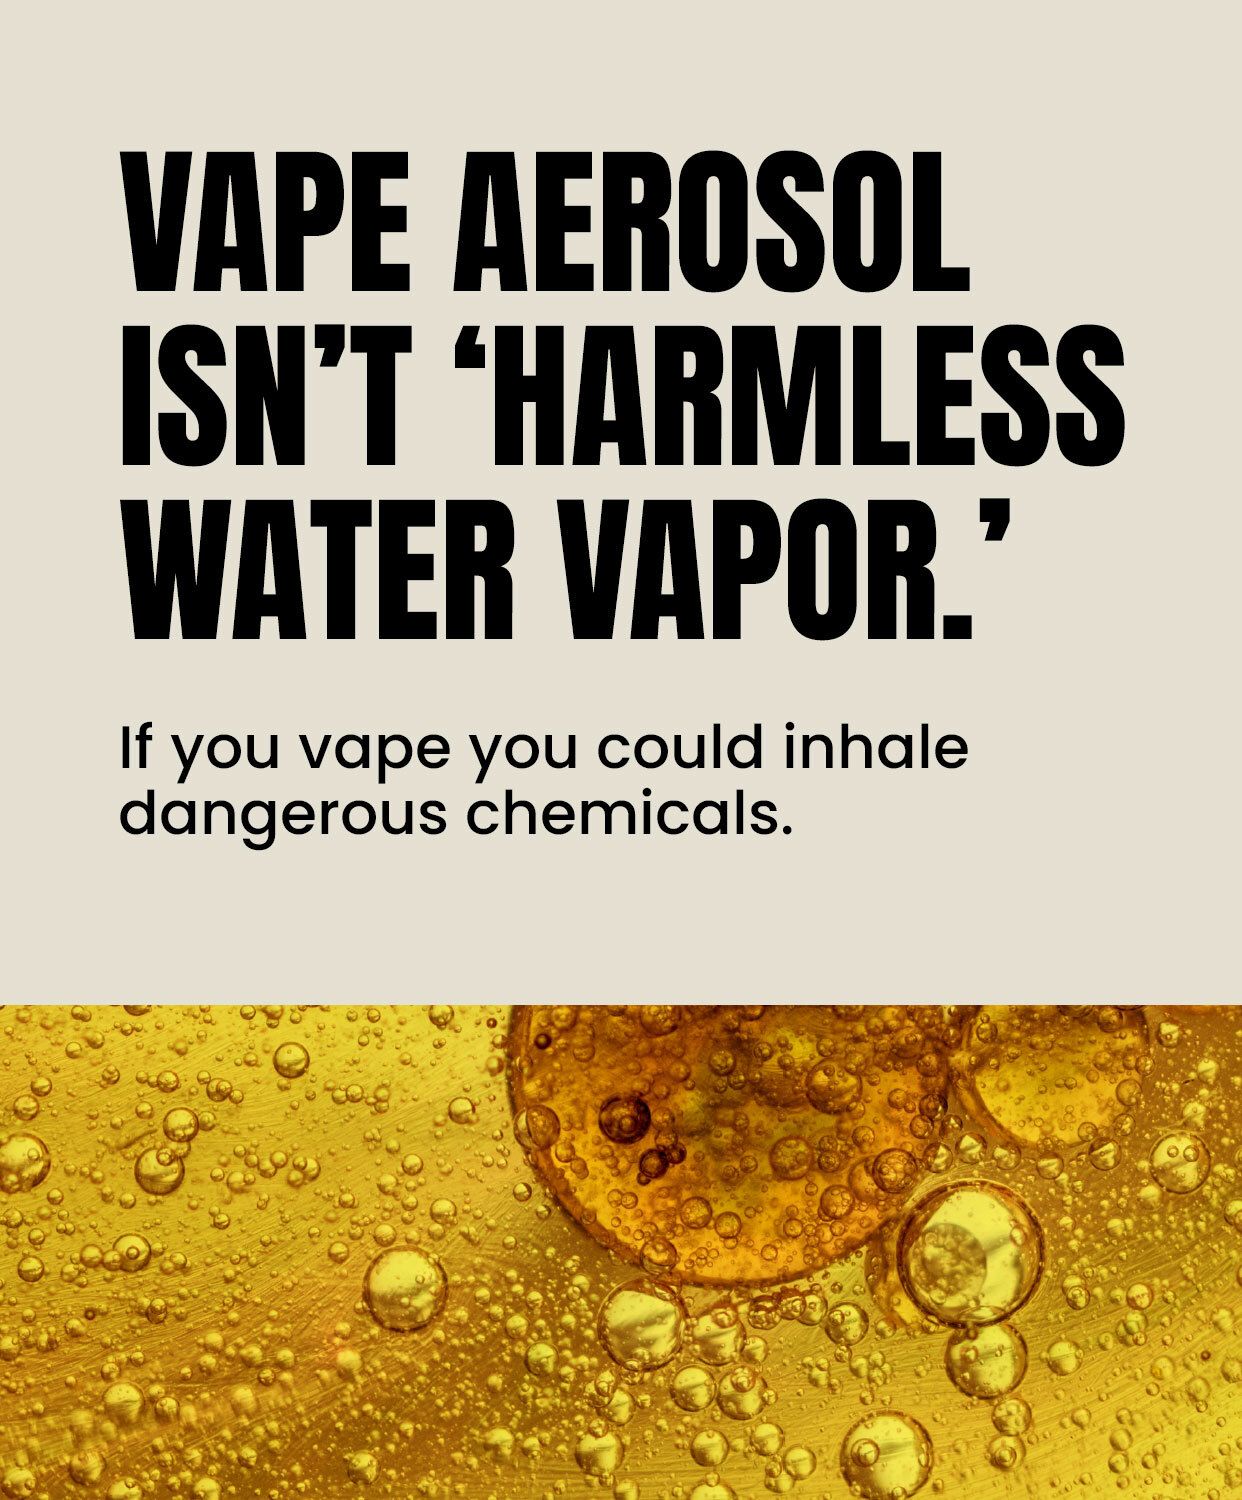 Vape aerosol isn’t ‘harmless water vapor.’ If you vape you could inhale dangerous chemicals.